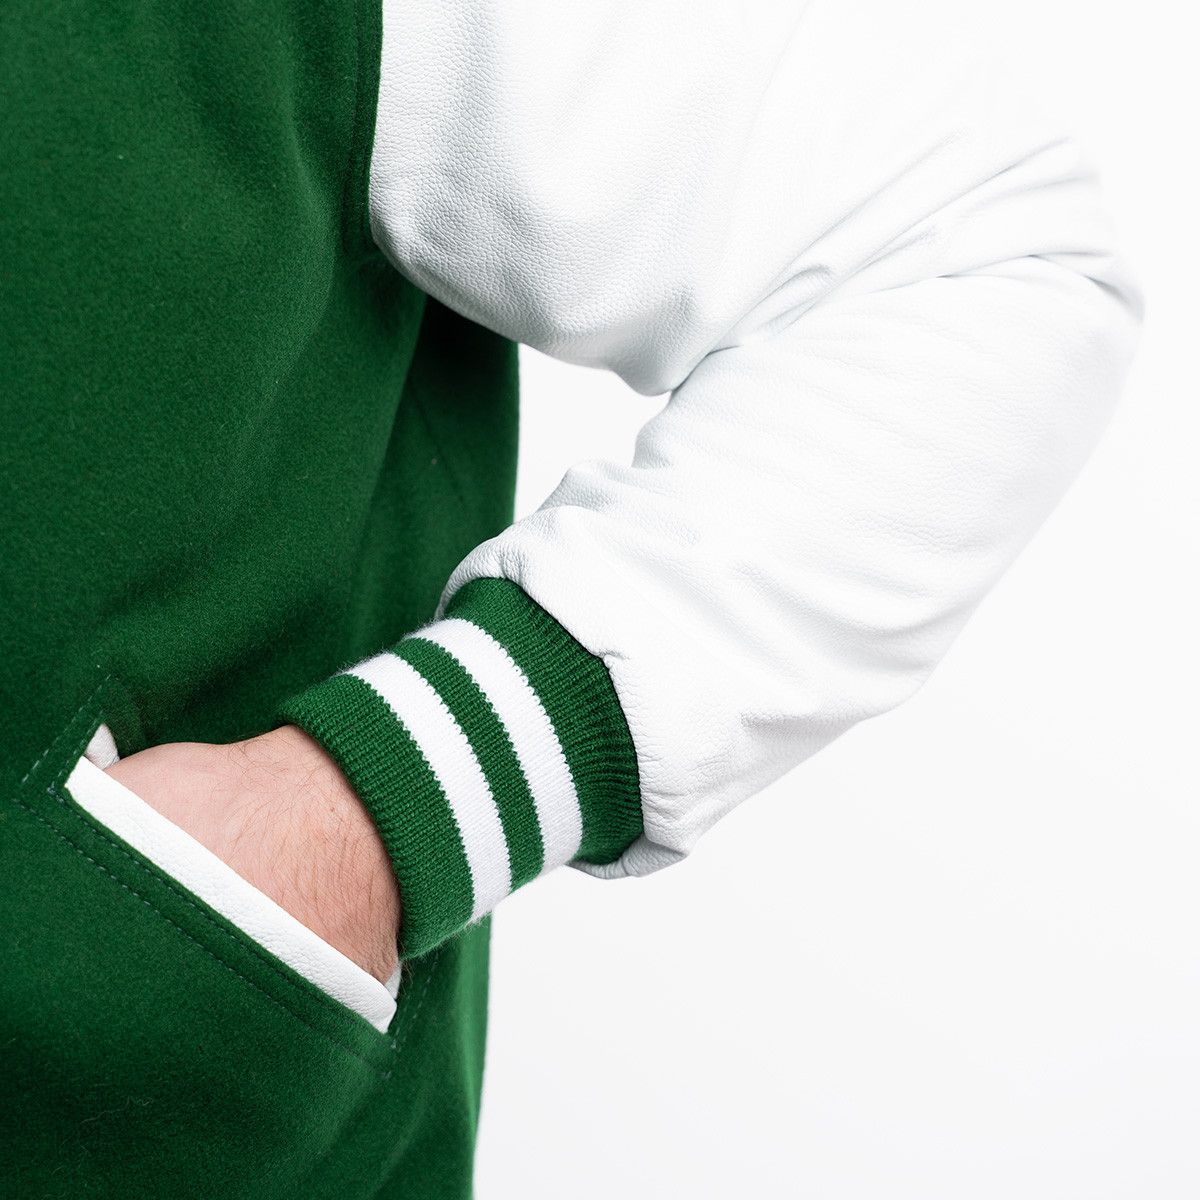 Varsity Base Kelly Green Wool Body & Bright White Leather Sleeves Letterman Jacket , Xxs